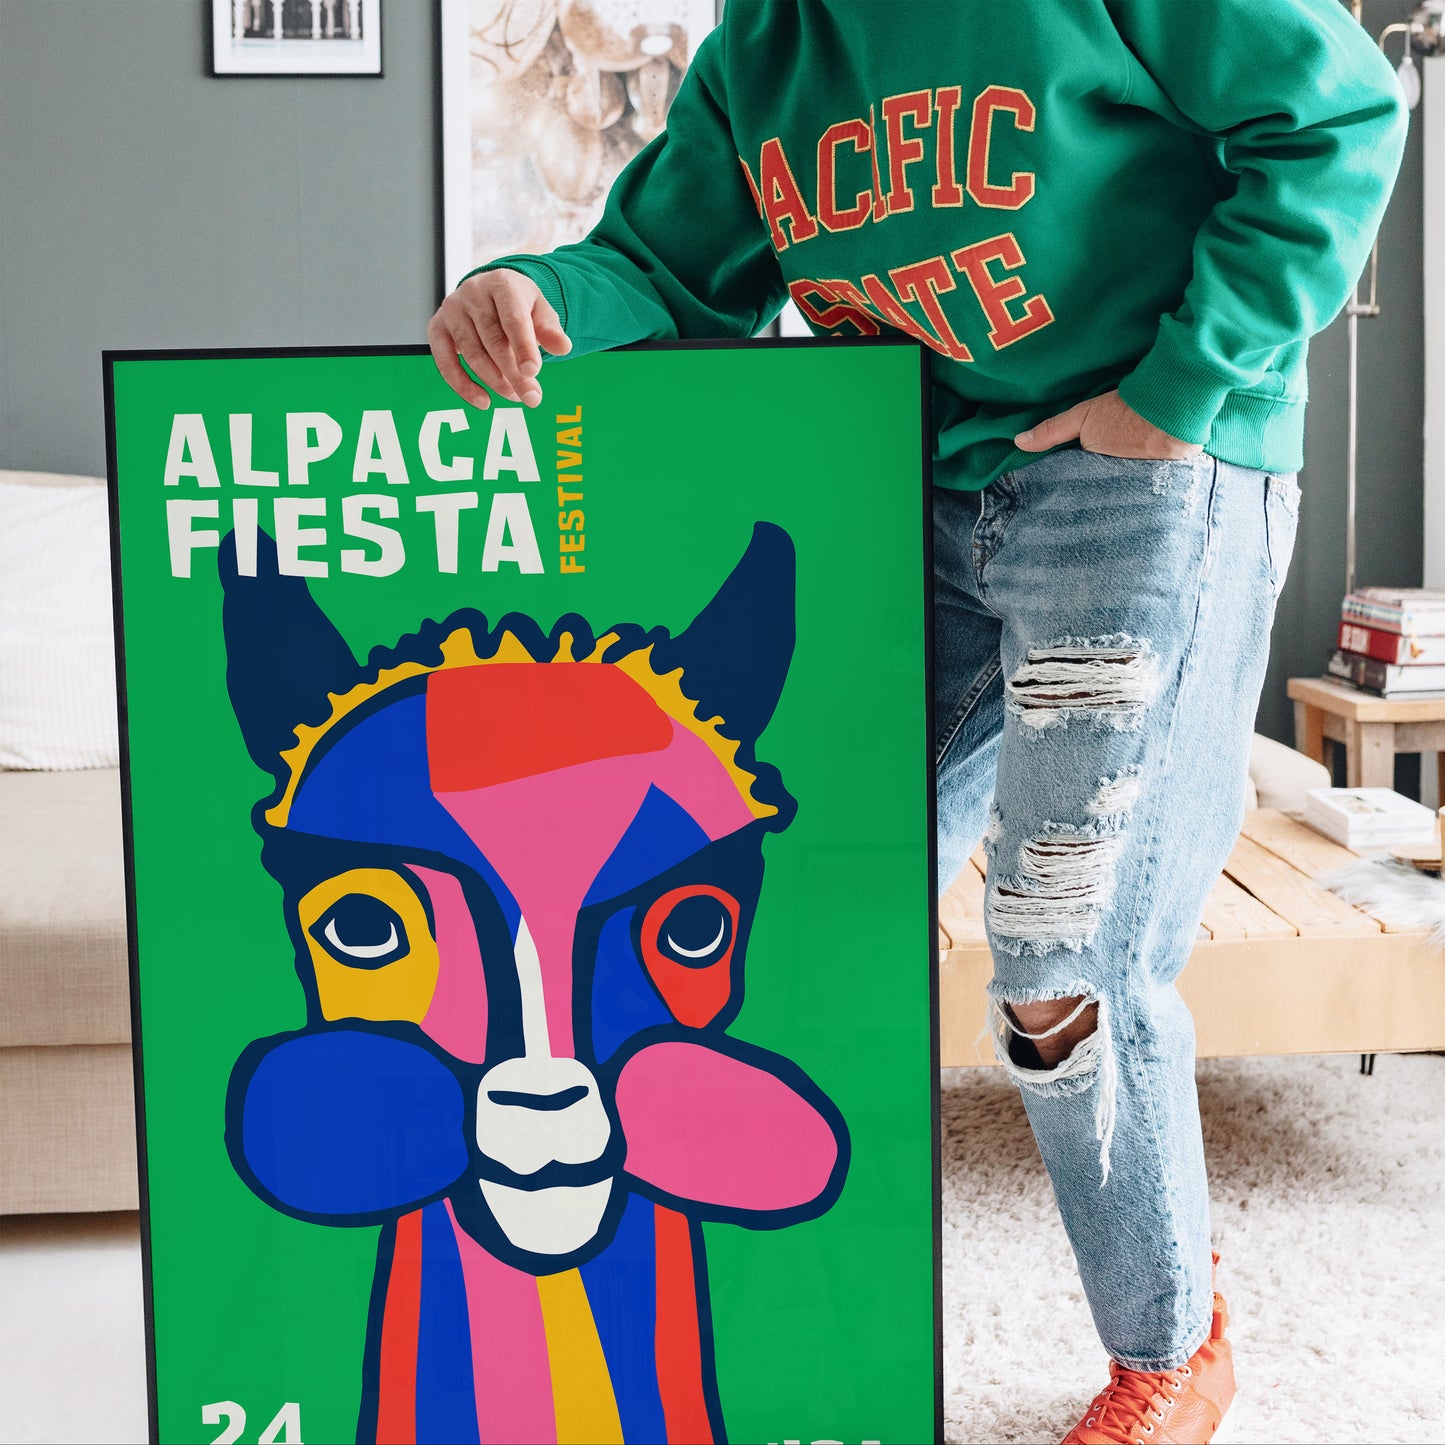 Alpaca Fiesta USA Festival Poster